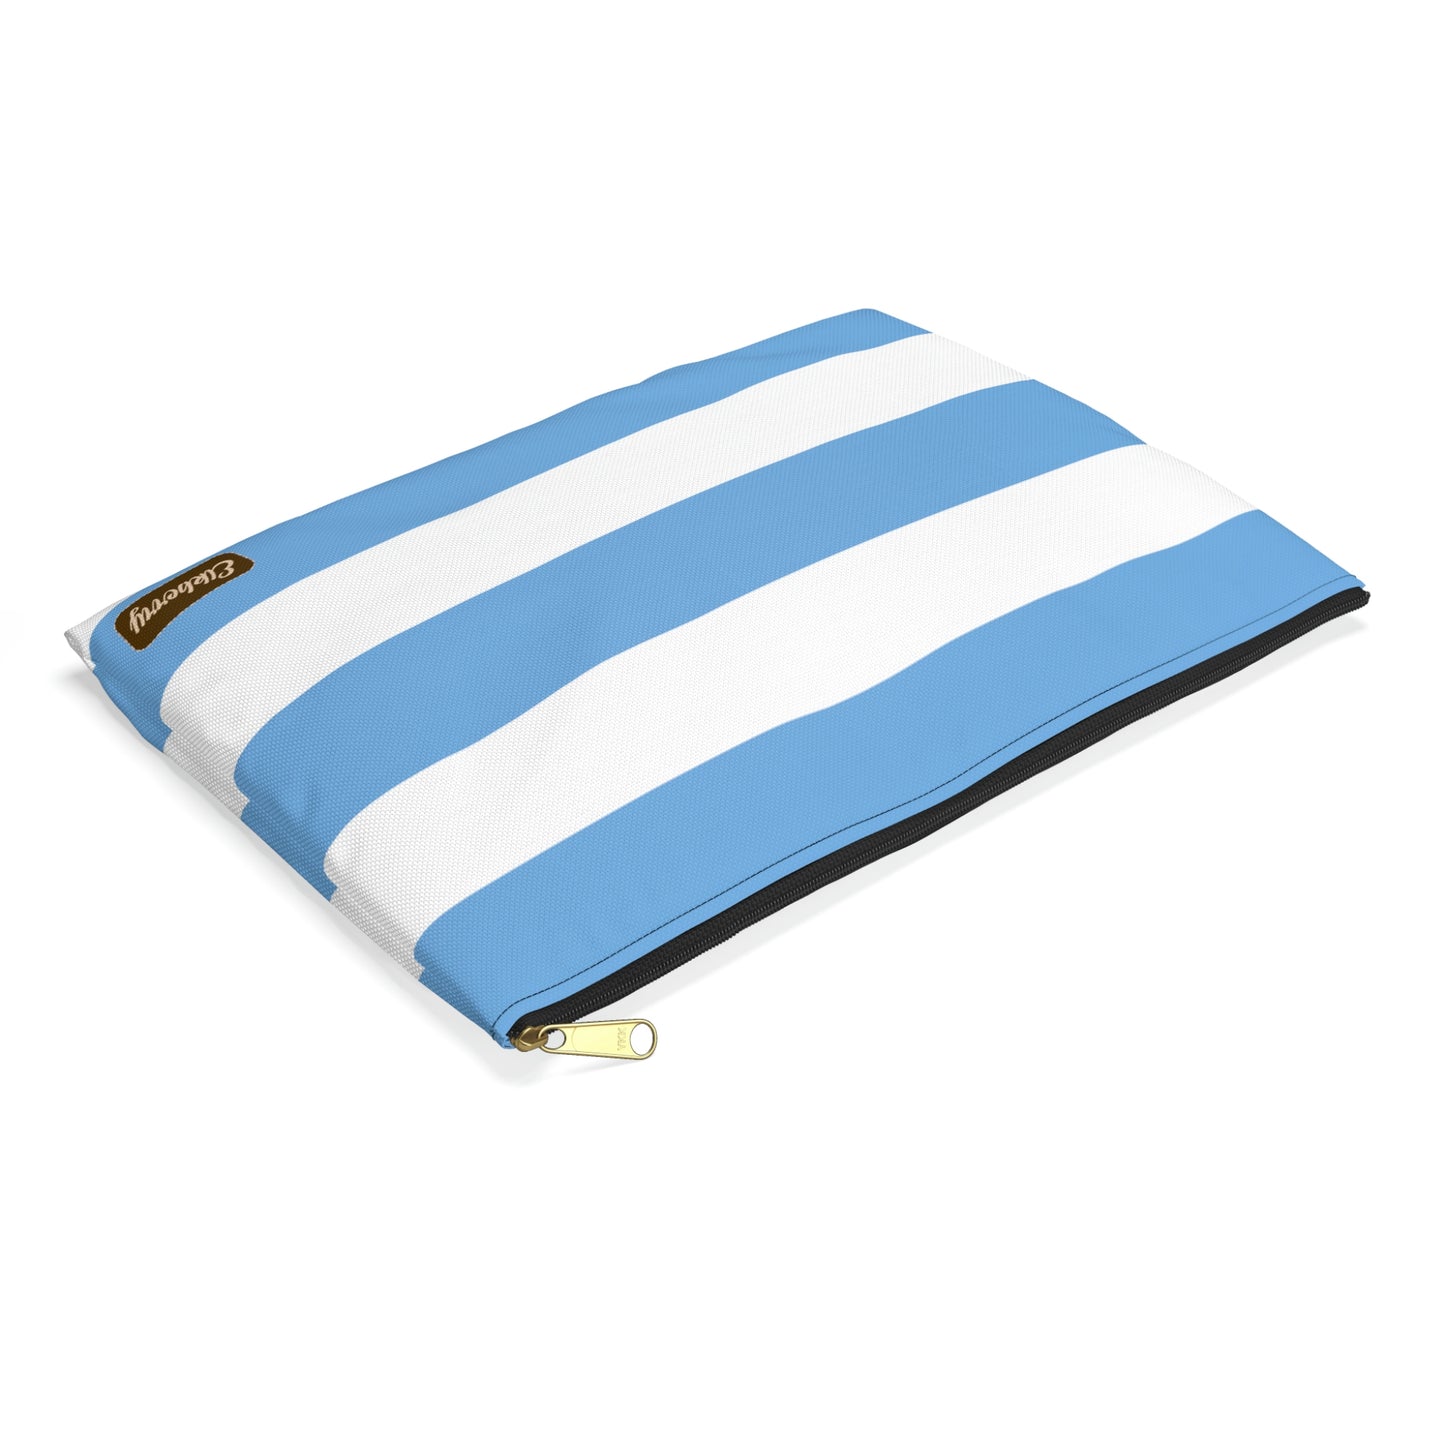 Flat Zipper Pouch - Light Blue/White Stripes